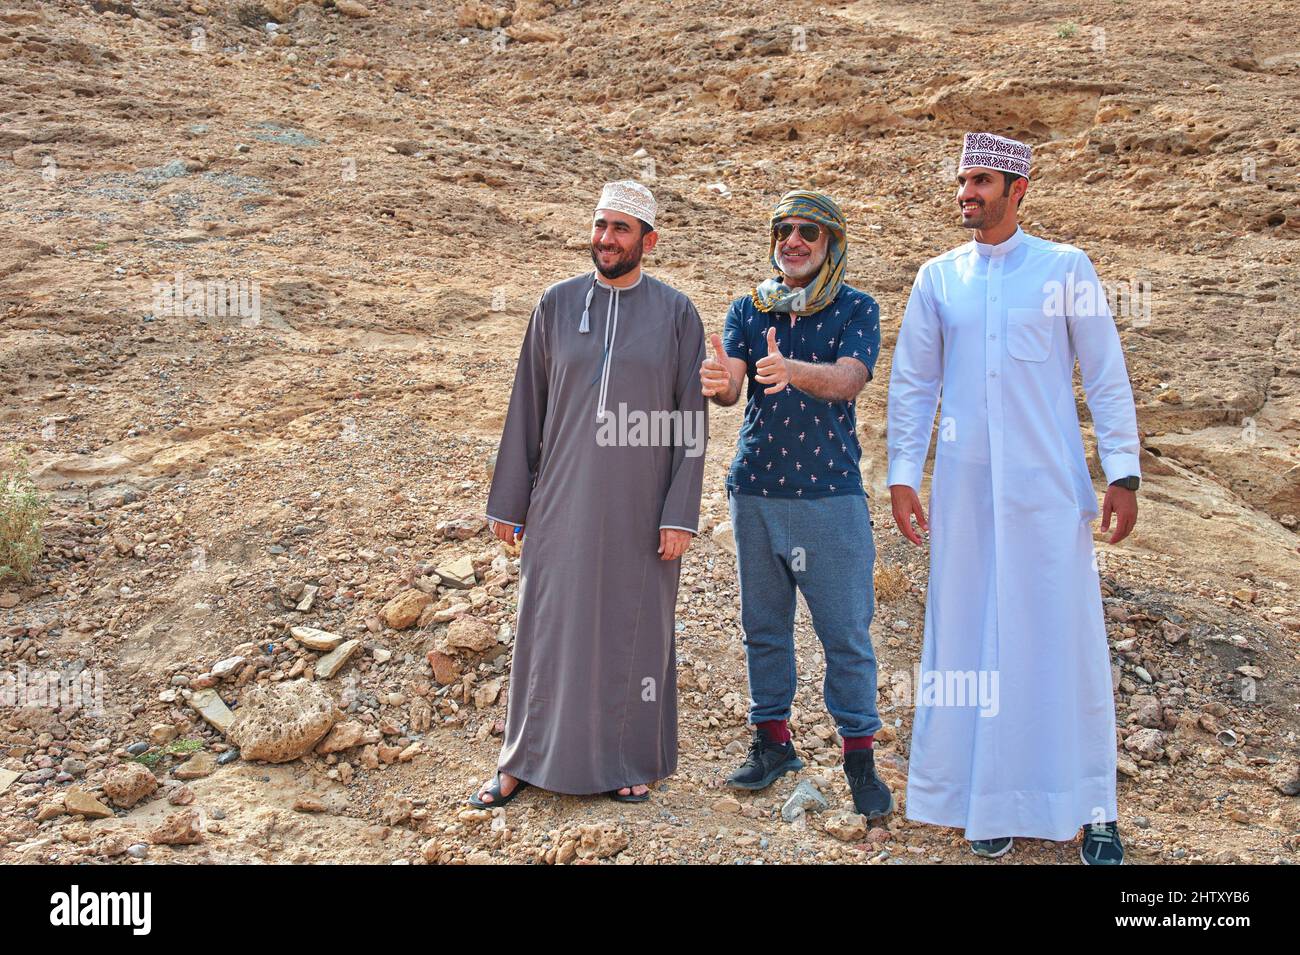 Portrait of three men in Arabic clothing in the desert Stock Photo